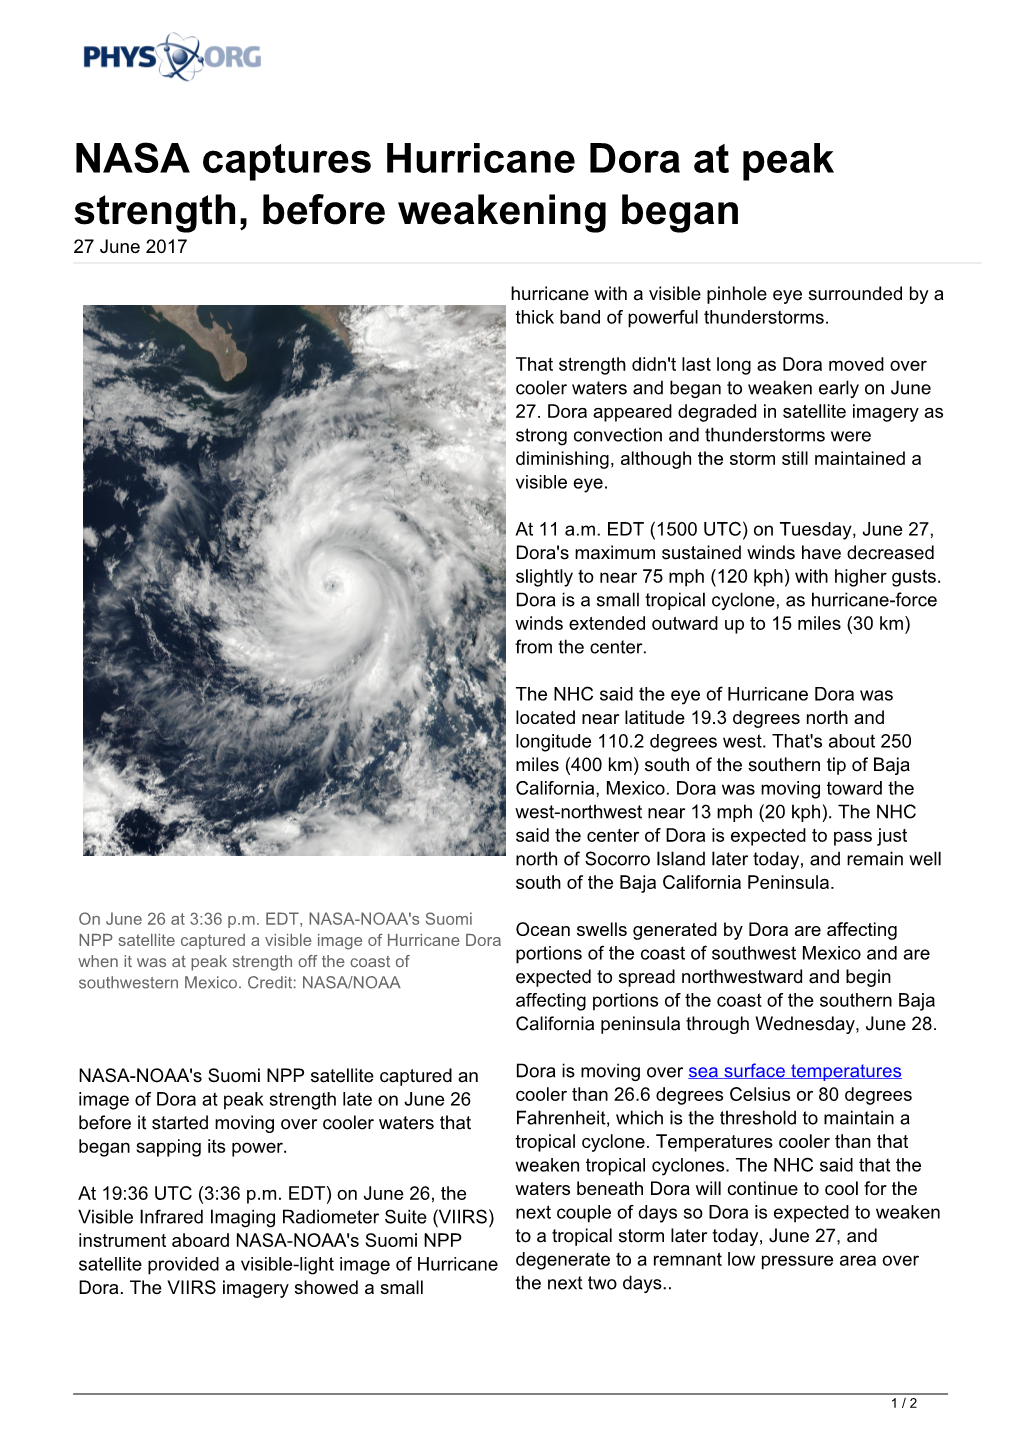 NASA Captures Hurricane Dora at Peak Strength, Before Weakening Began 27 June 2017